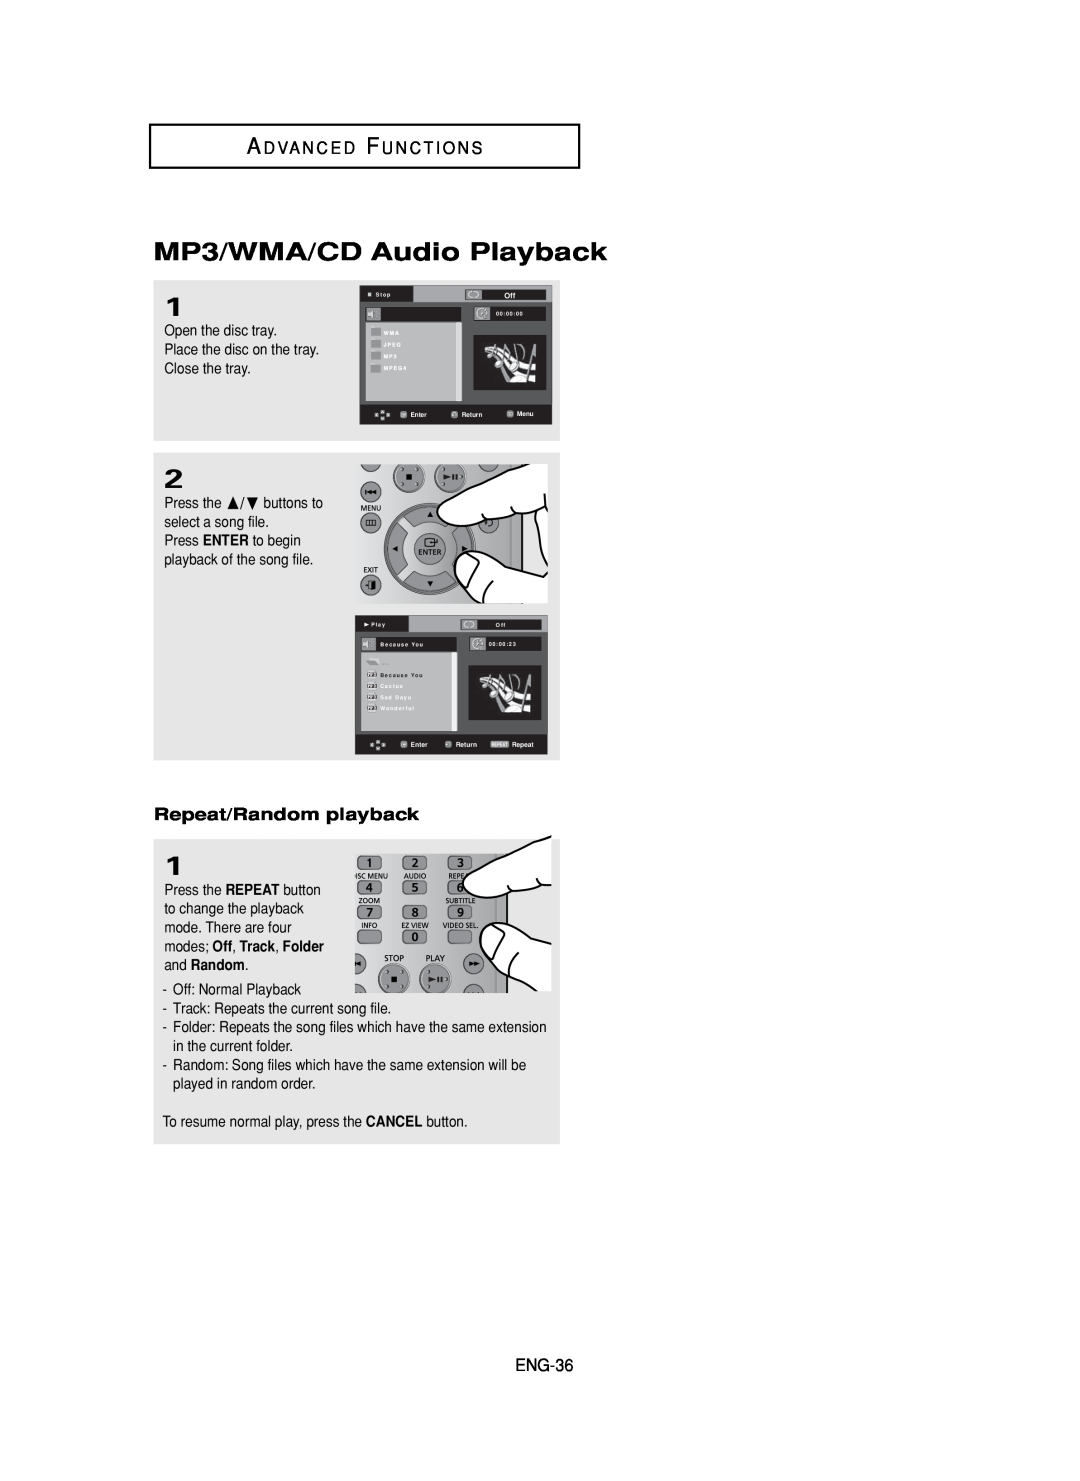 Samsung DVD-FP580, DVD-F1080 MP3/WMA/CD Audio Playback, A D Va N C E D F U N C T I O N S, Repeat/Random playback, ENG-36 